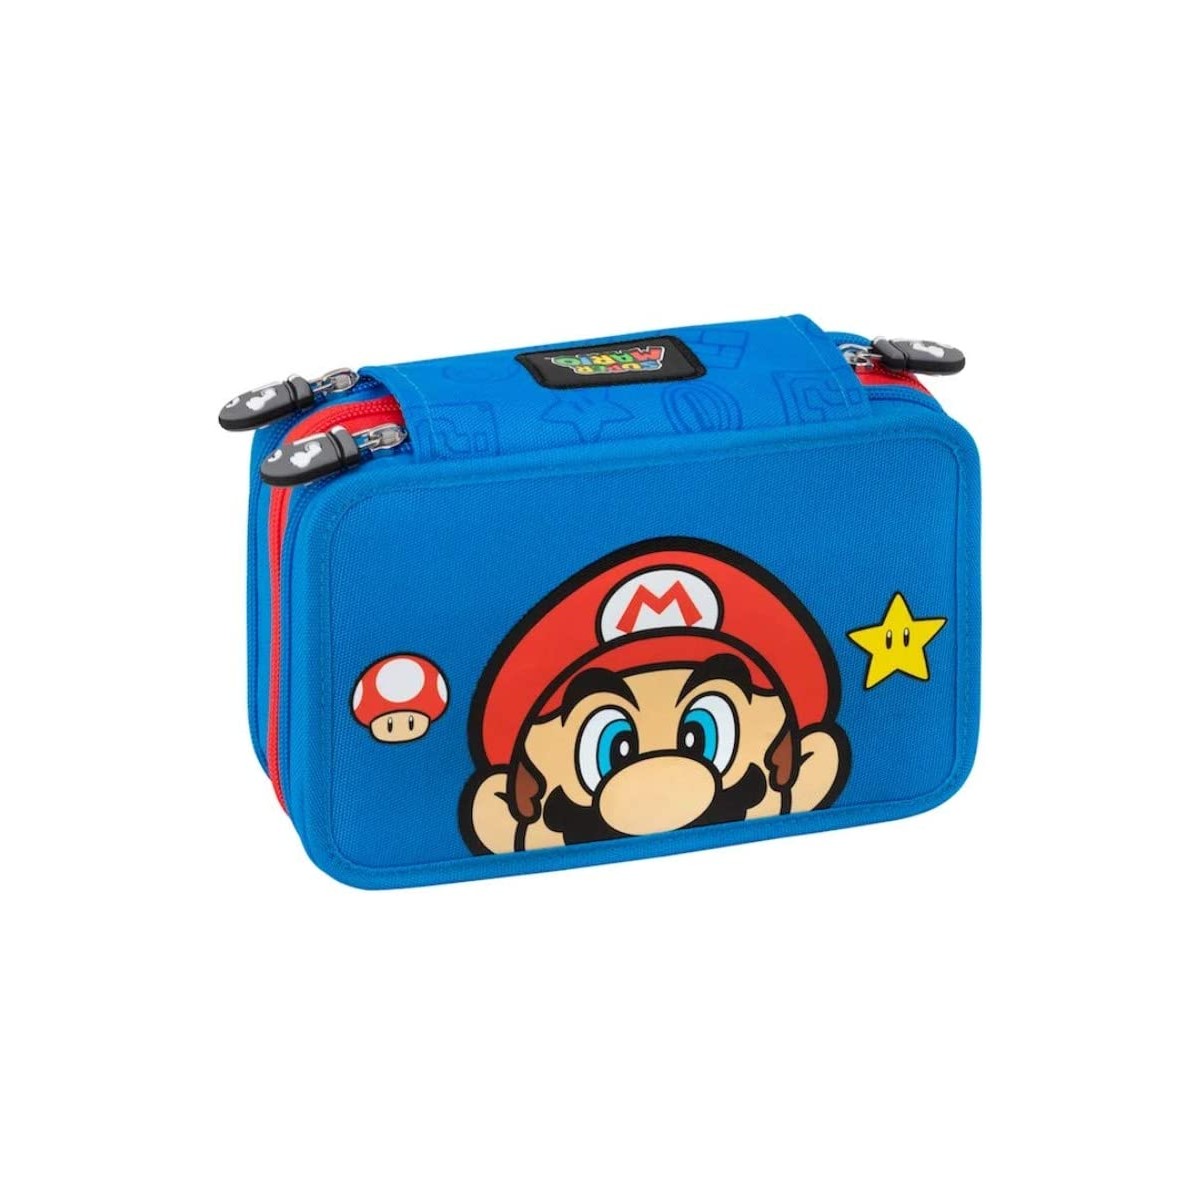 Astuccio borsello Super Mario Bros, 3 zip, per la scuola